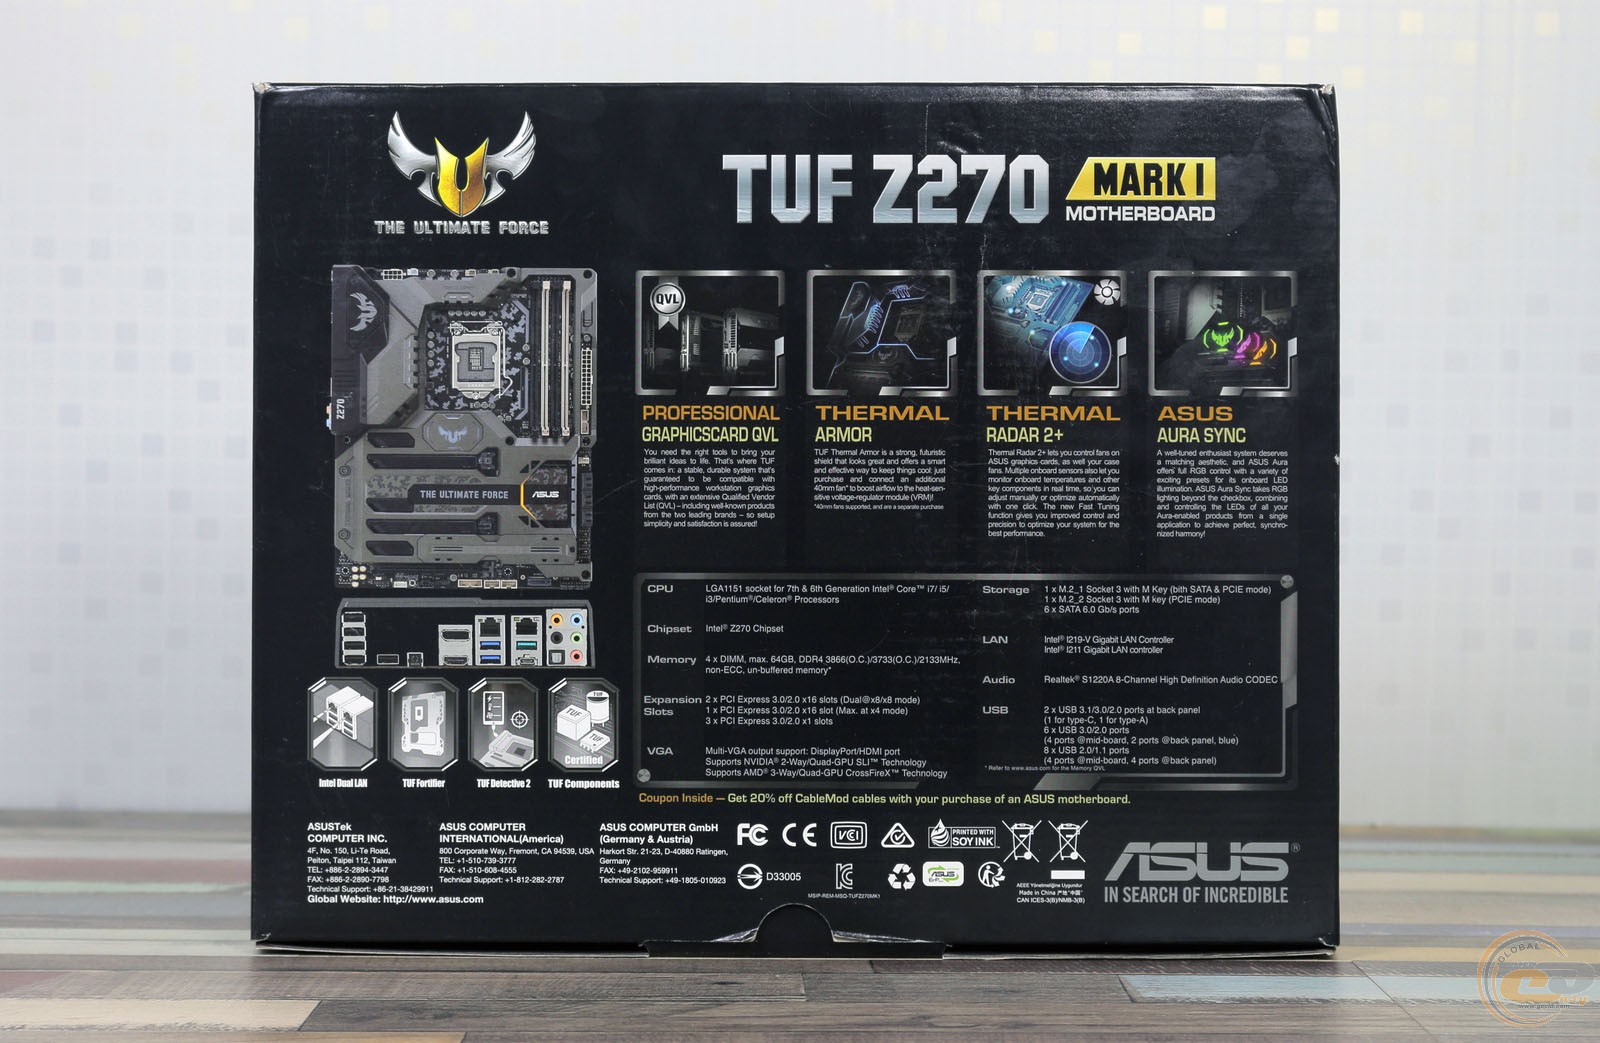 Tuf mark 1. ASUS TUF Mark 1. ASUS TUF z270 Mark 1. ASUS TUF Mark 1 2014. ASUS z270 TUF Mark 1 схема.